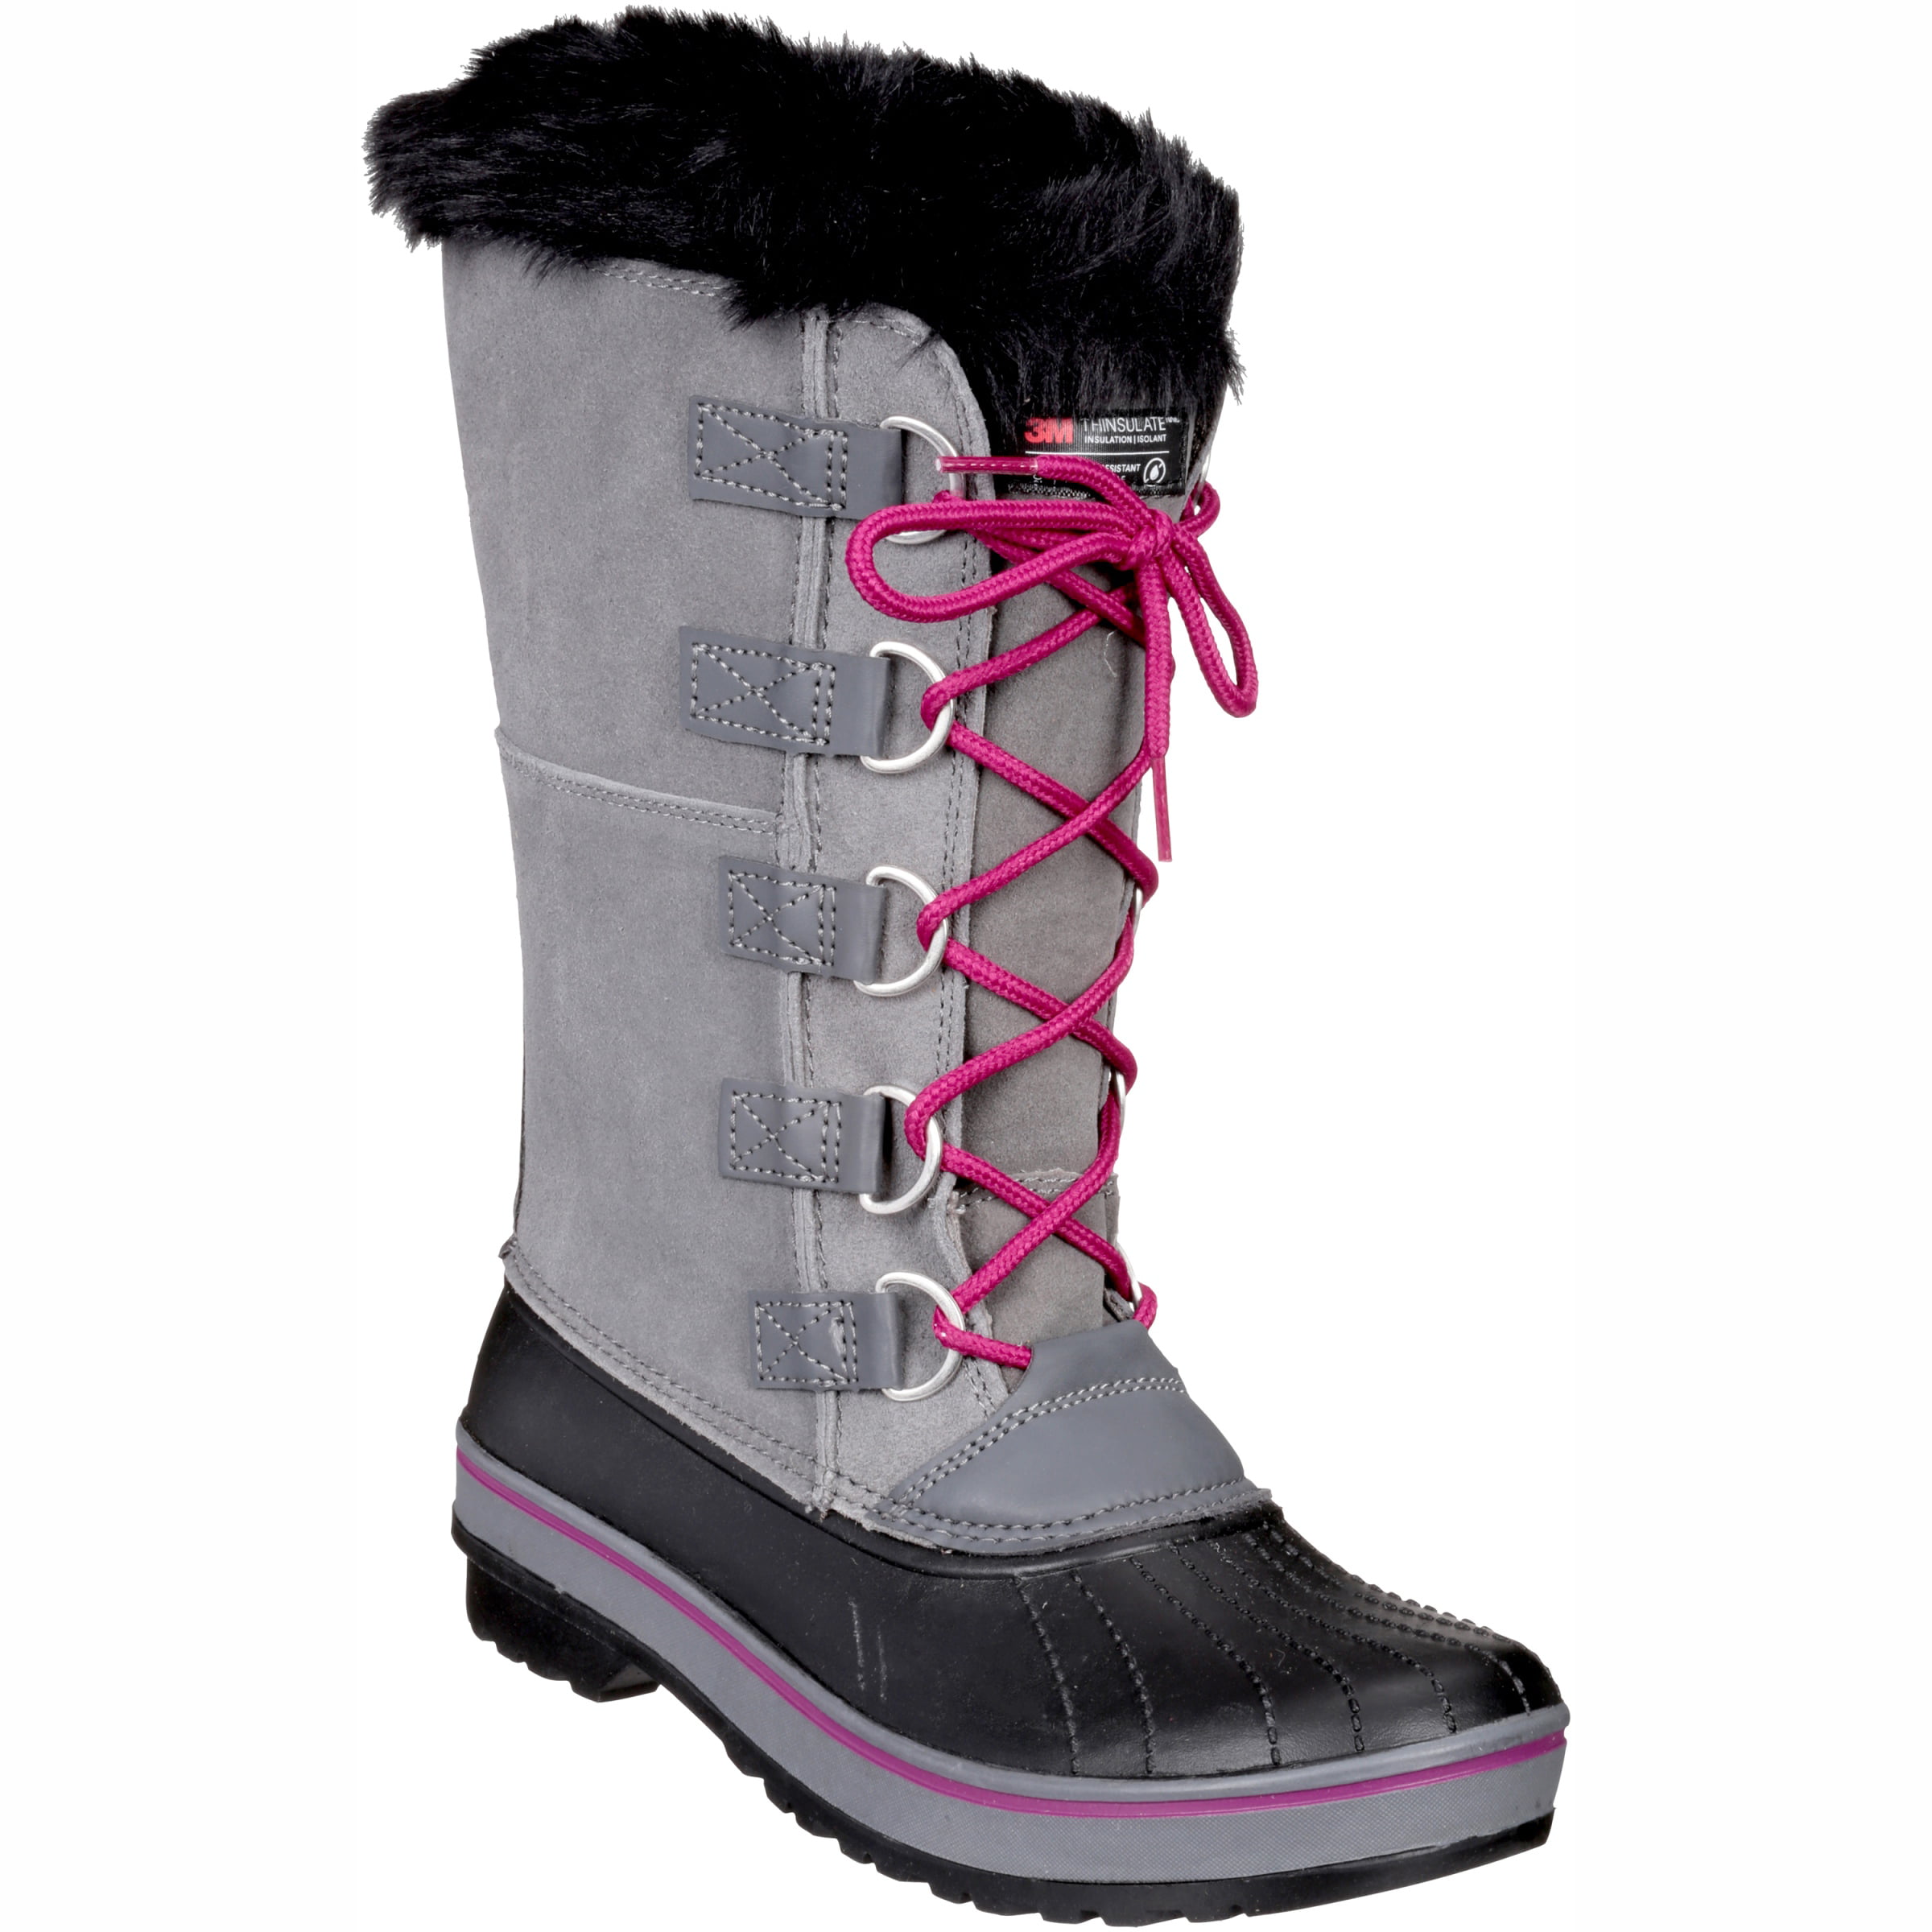 ozark trail women's boots